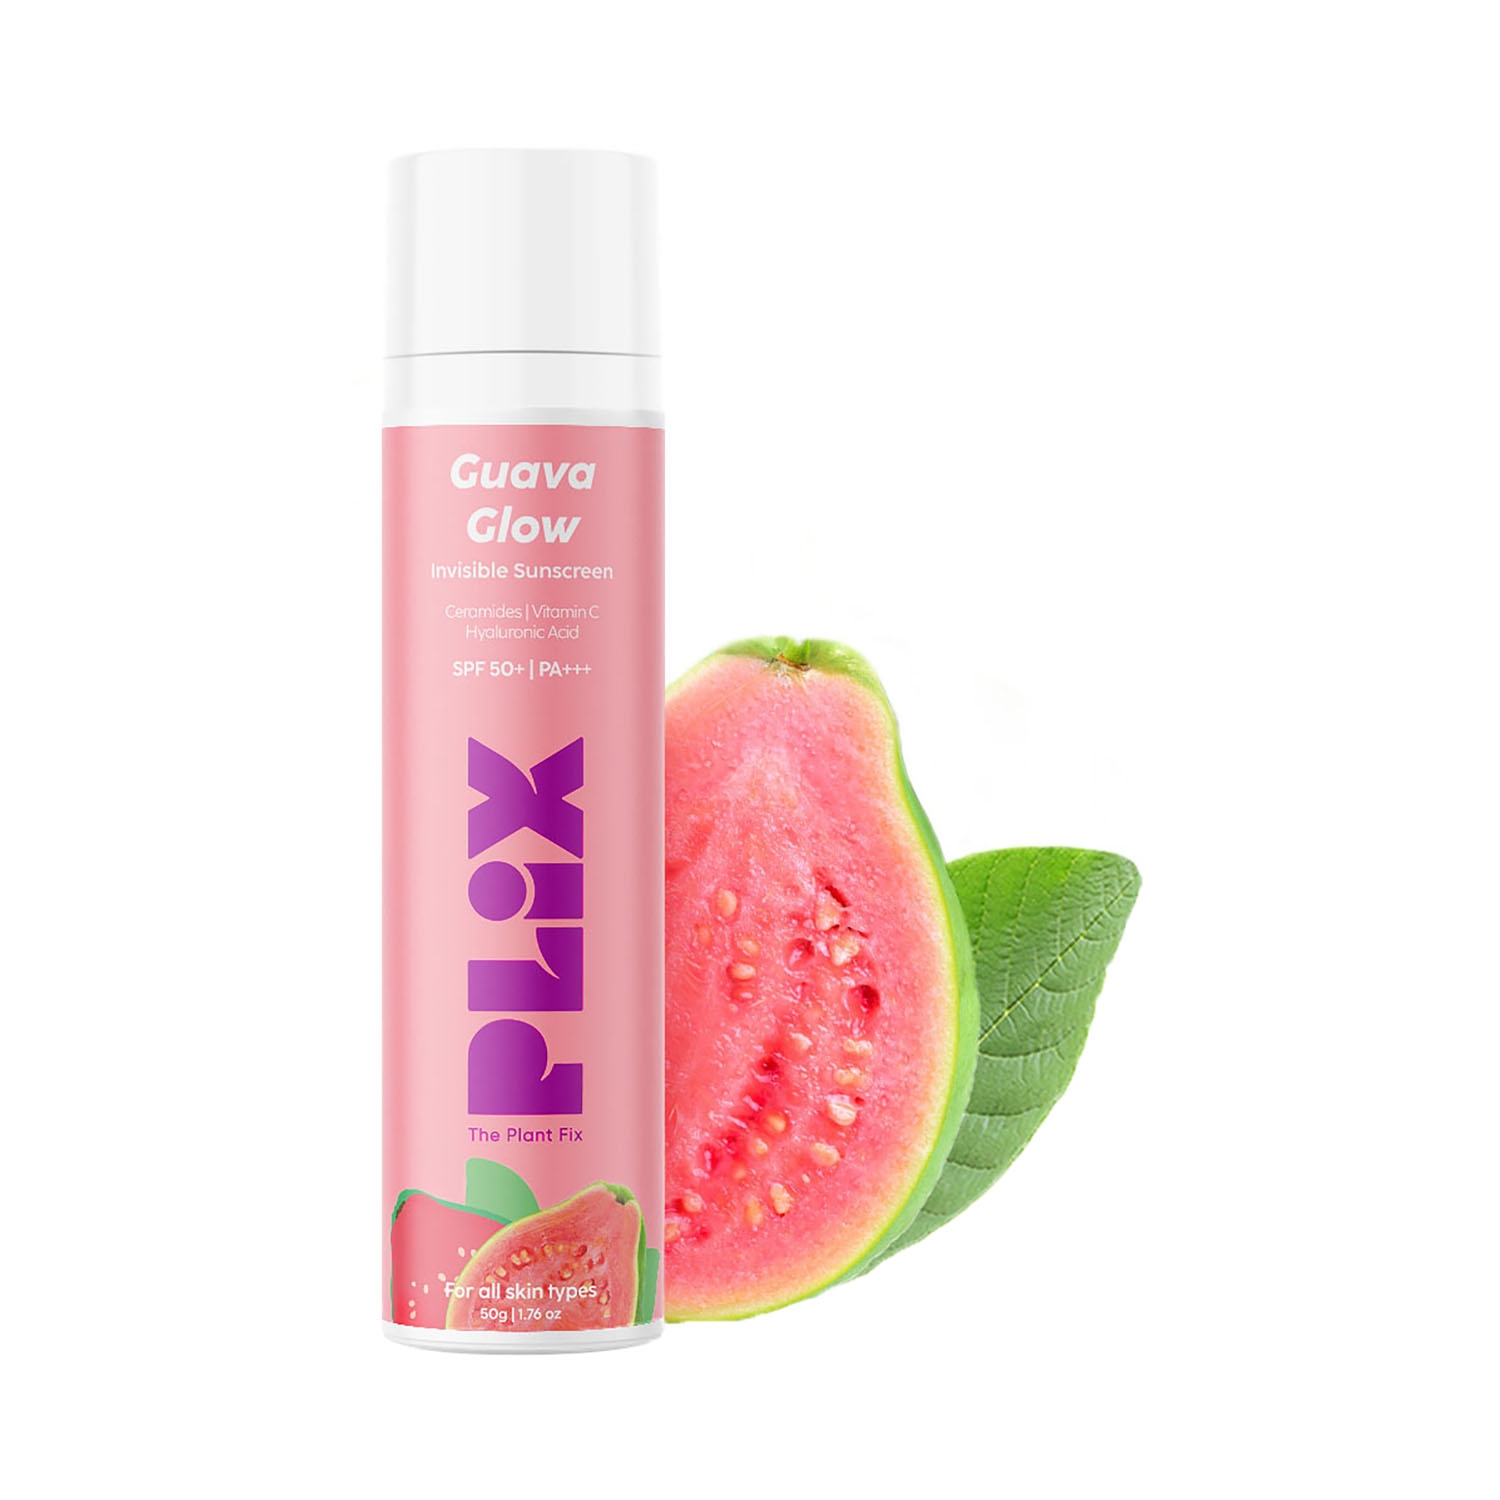 Plix The Plant Fix Guava Glow Invisible Sunscreen Gel SPF 50+ (50g)